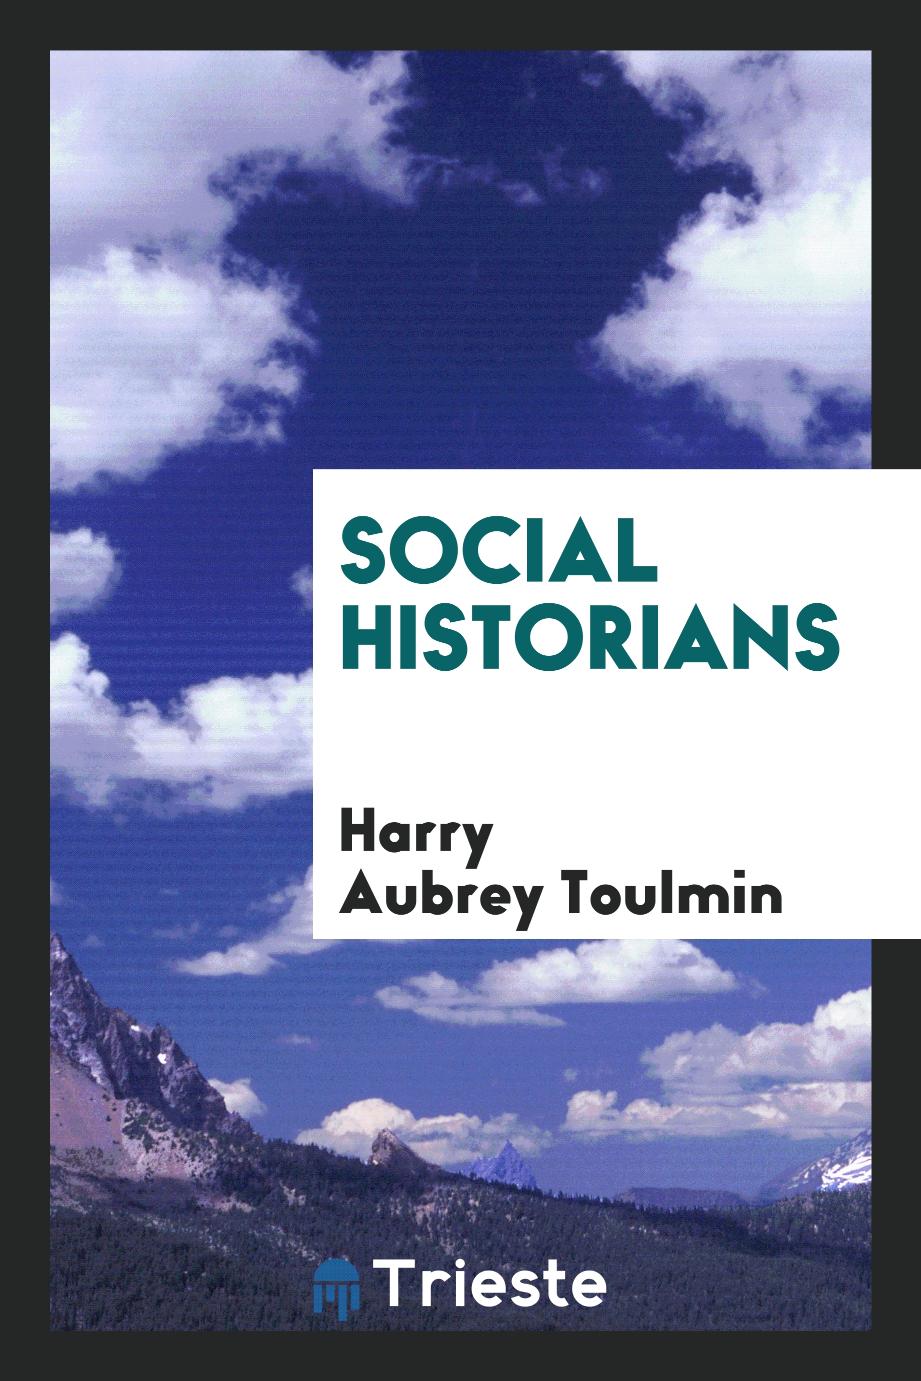 Social historians